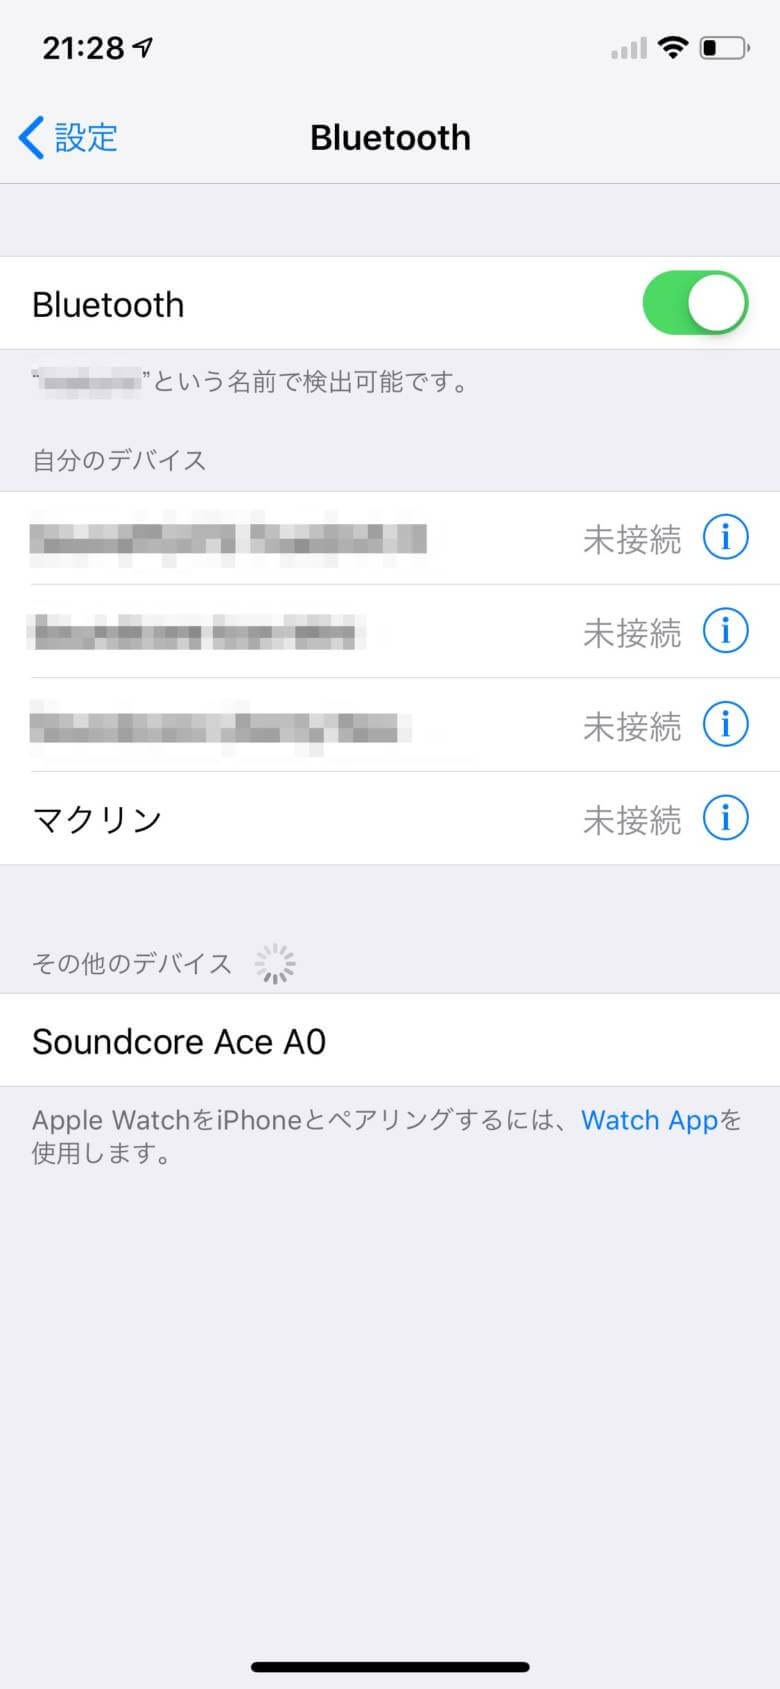 Soundcore Ace A0のペアリングモード